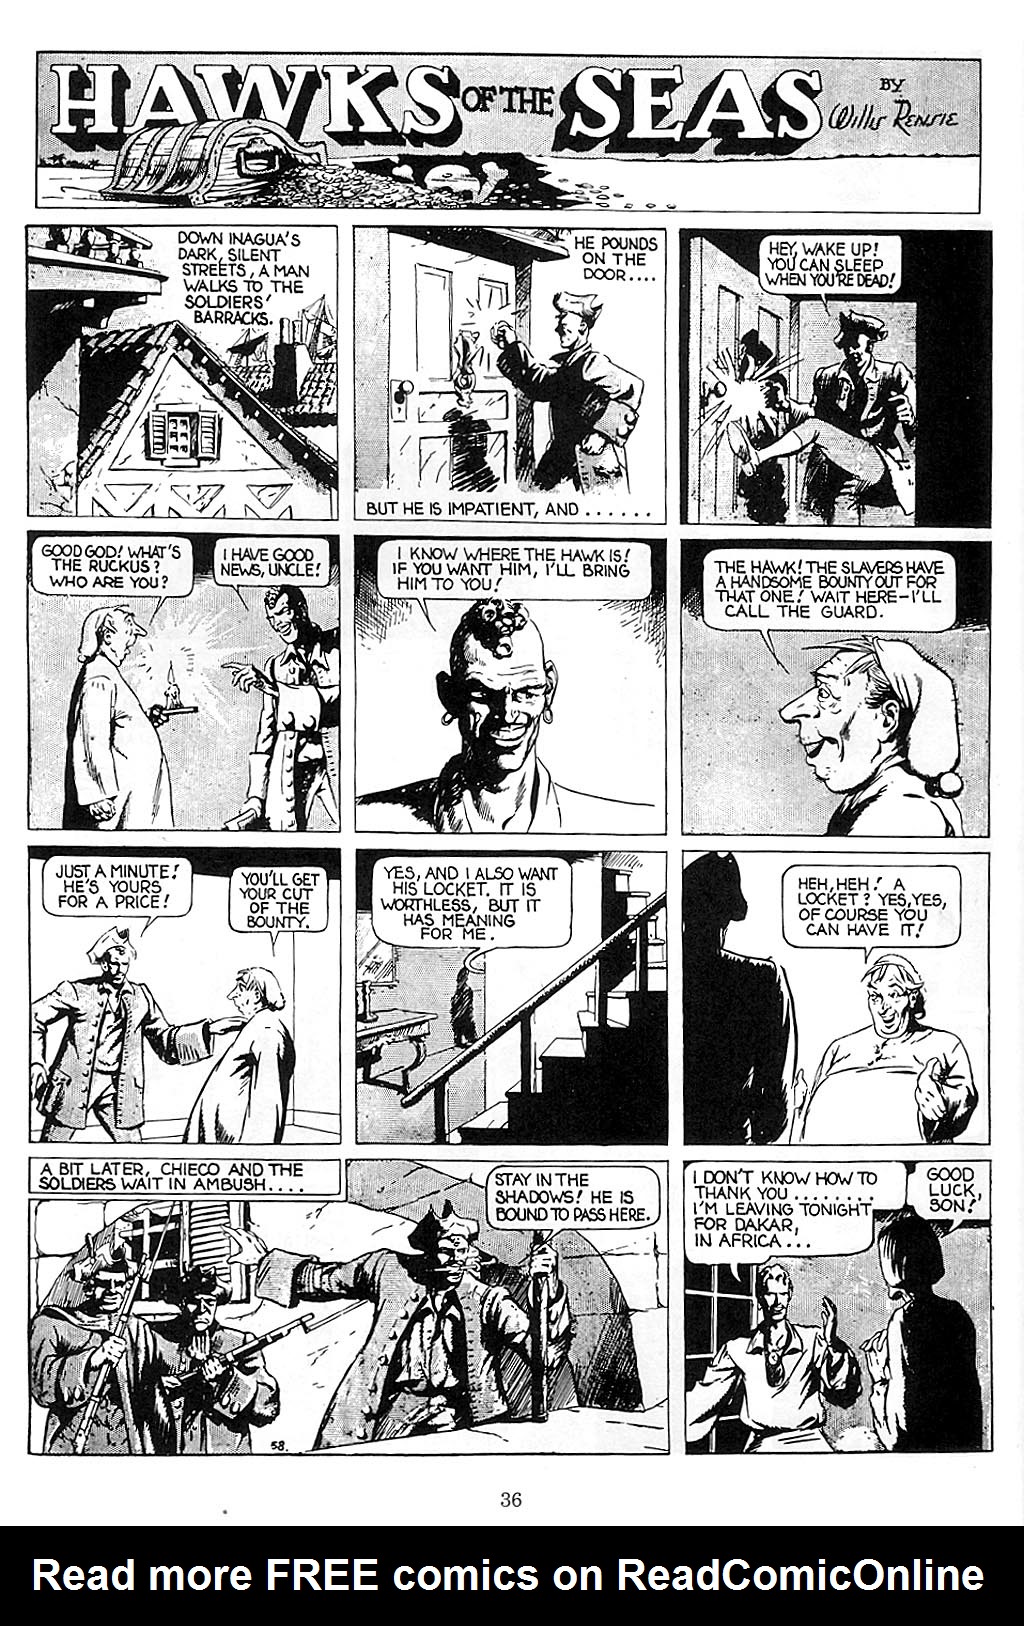 Read online Will Eisner's Hawks of the Seas comic -  Issue # TPB - 37